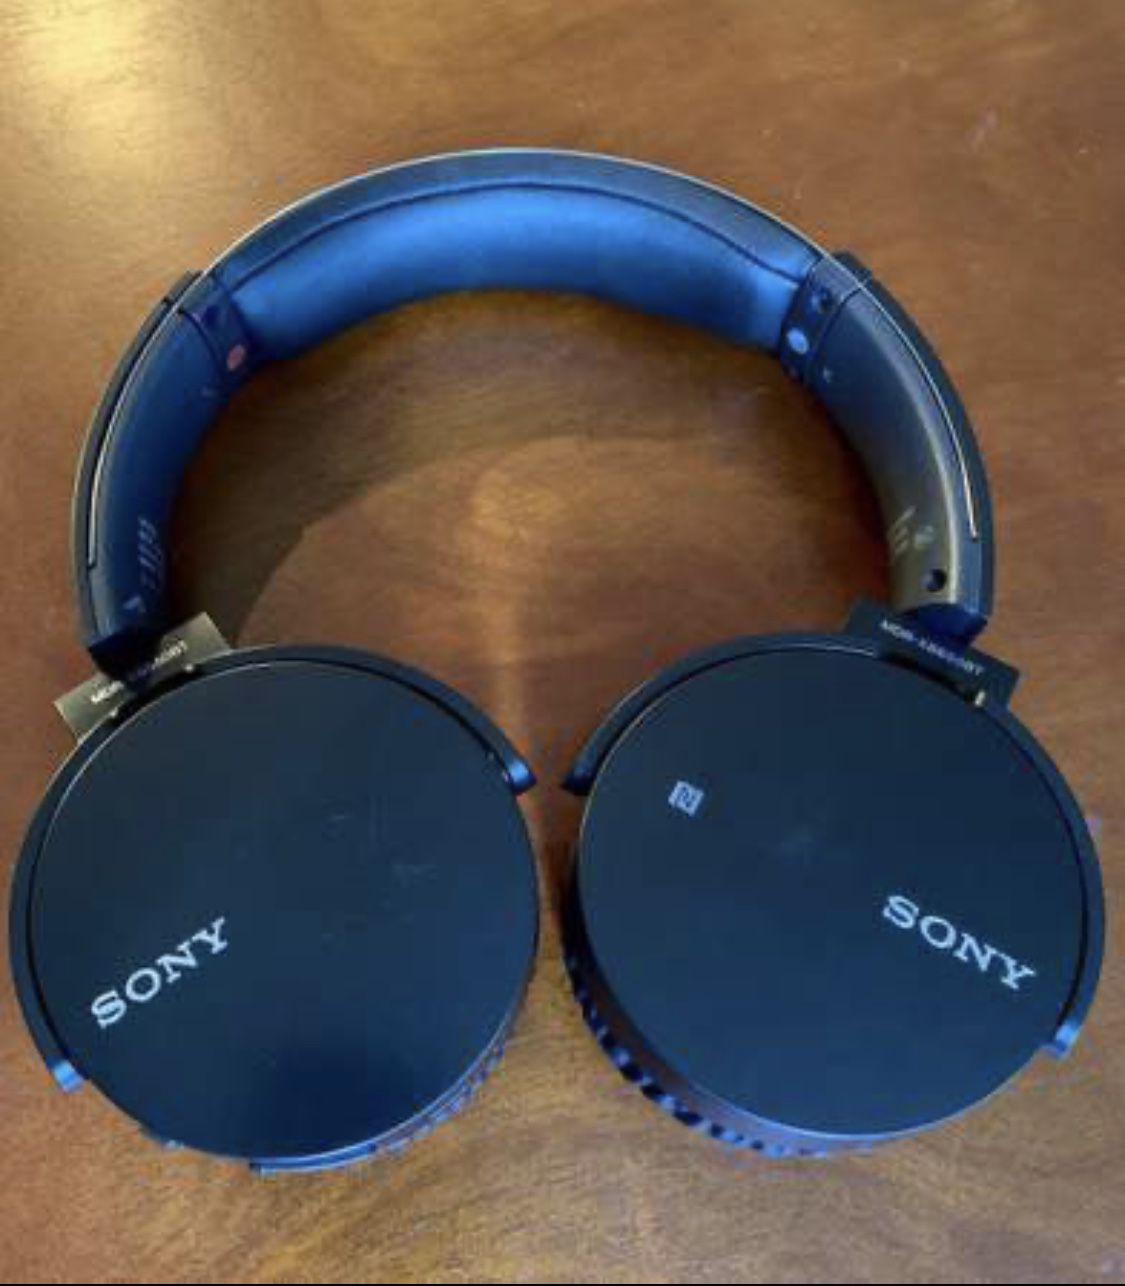 Bluetooth Wireless Sony Headphones - matte black